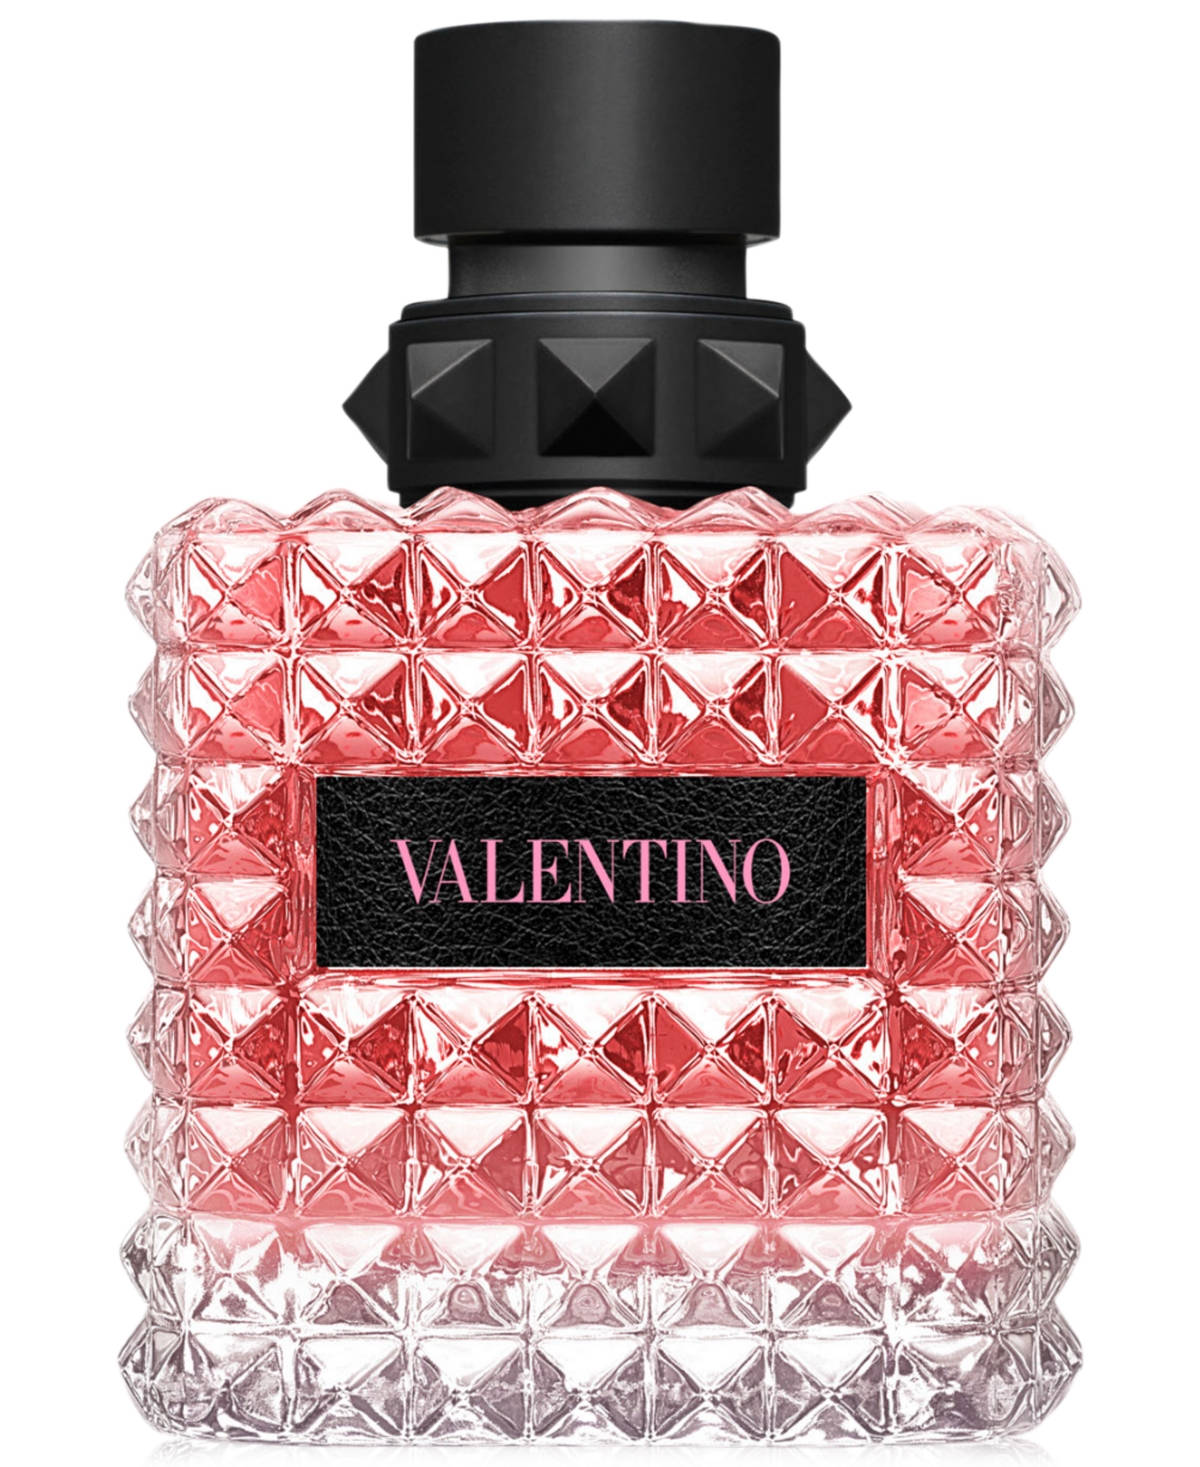 Valentino Perfume Bottle Wallpaper